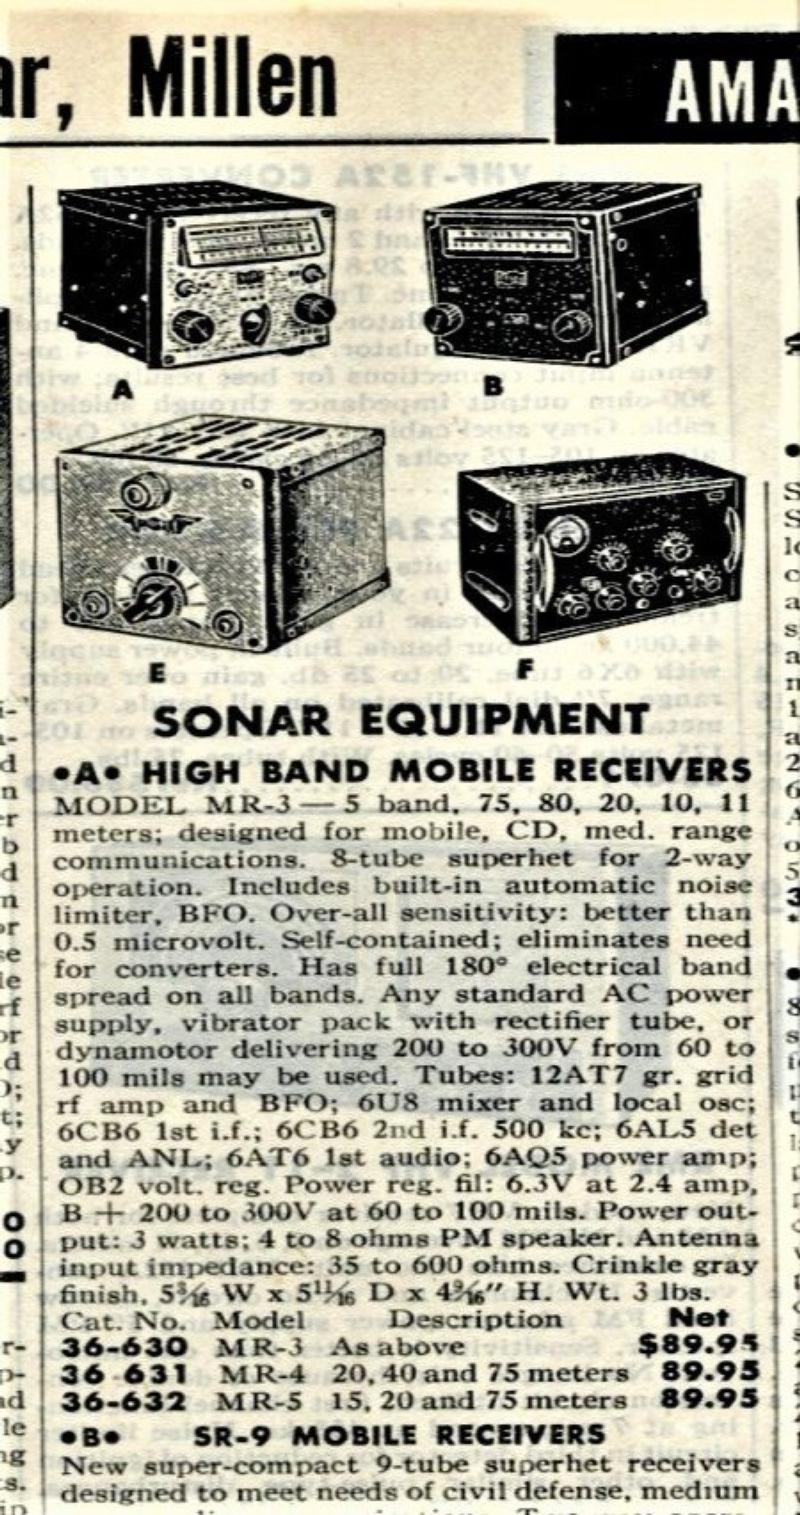 MR-3 ad from 1954 Radio Shack catalog